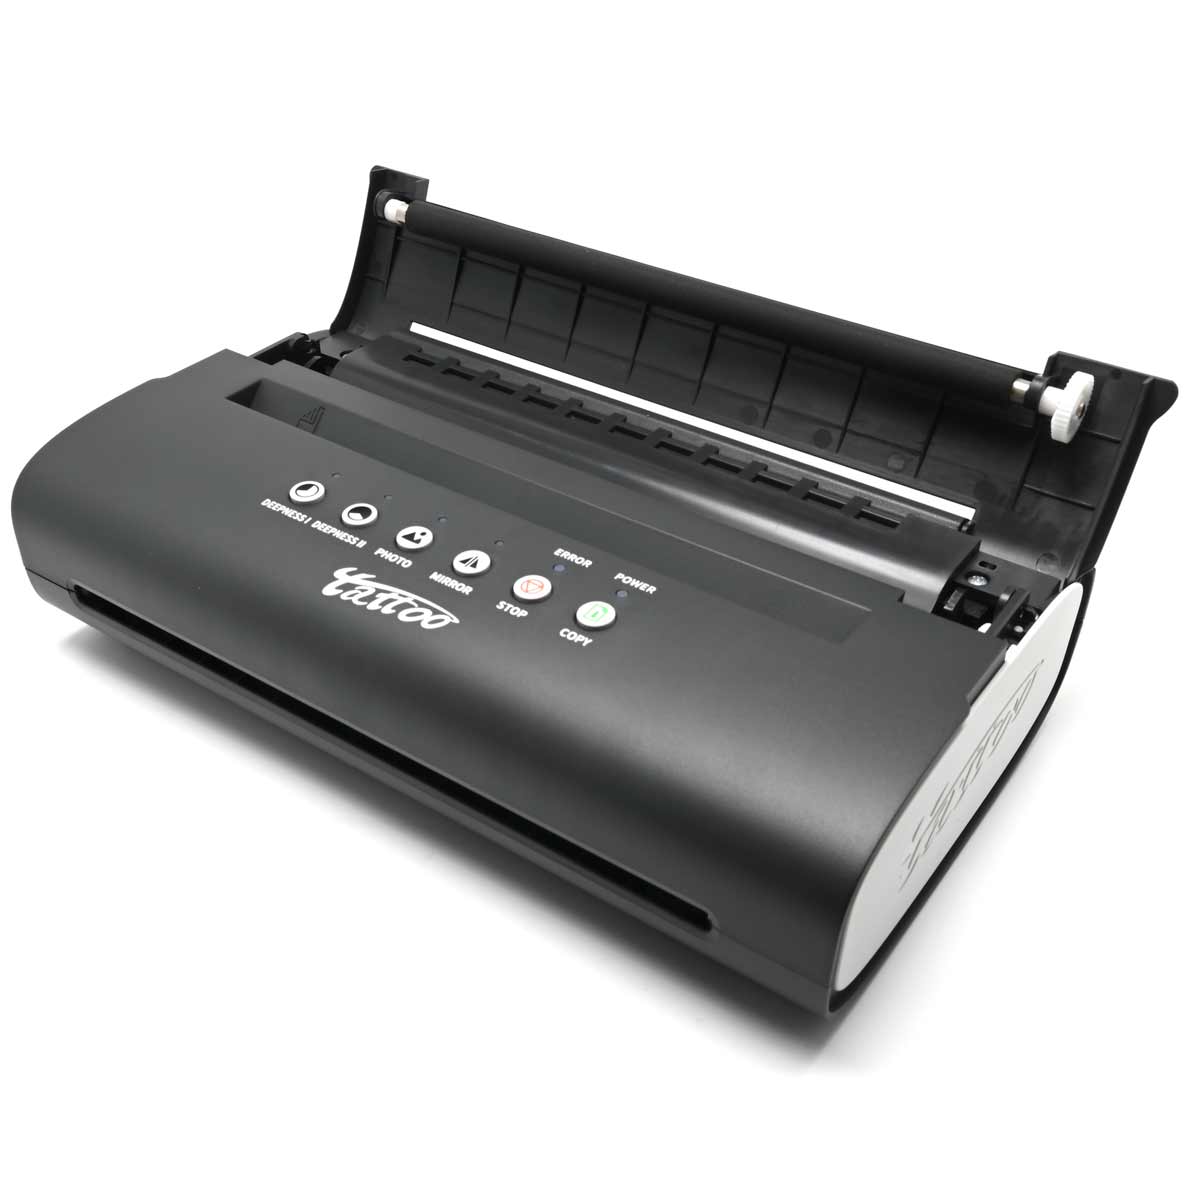 TOEC WIFI Thermal Stencil Printer  OPEN BOX  Perpetual Permanent Makeup